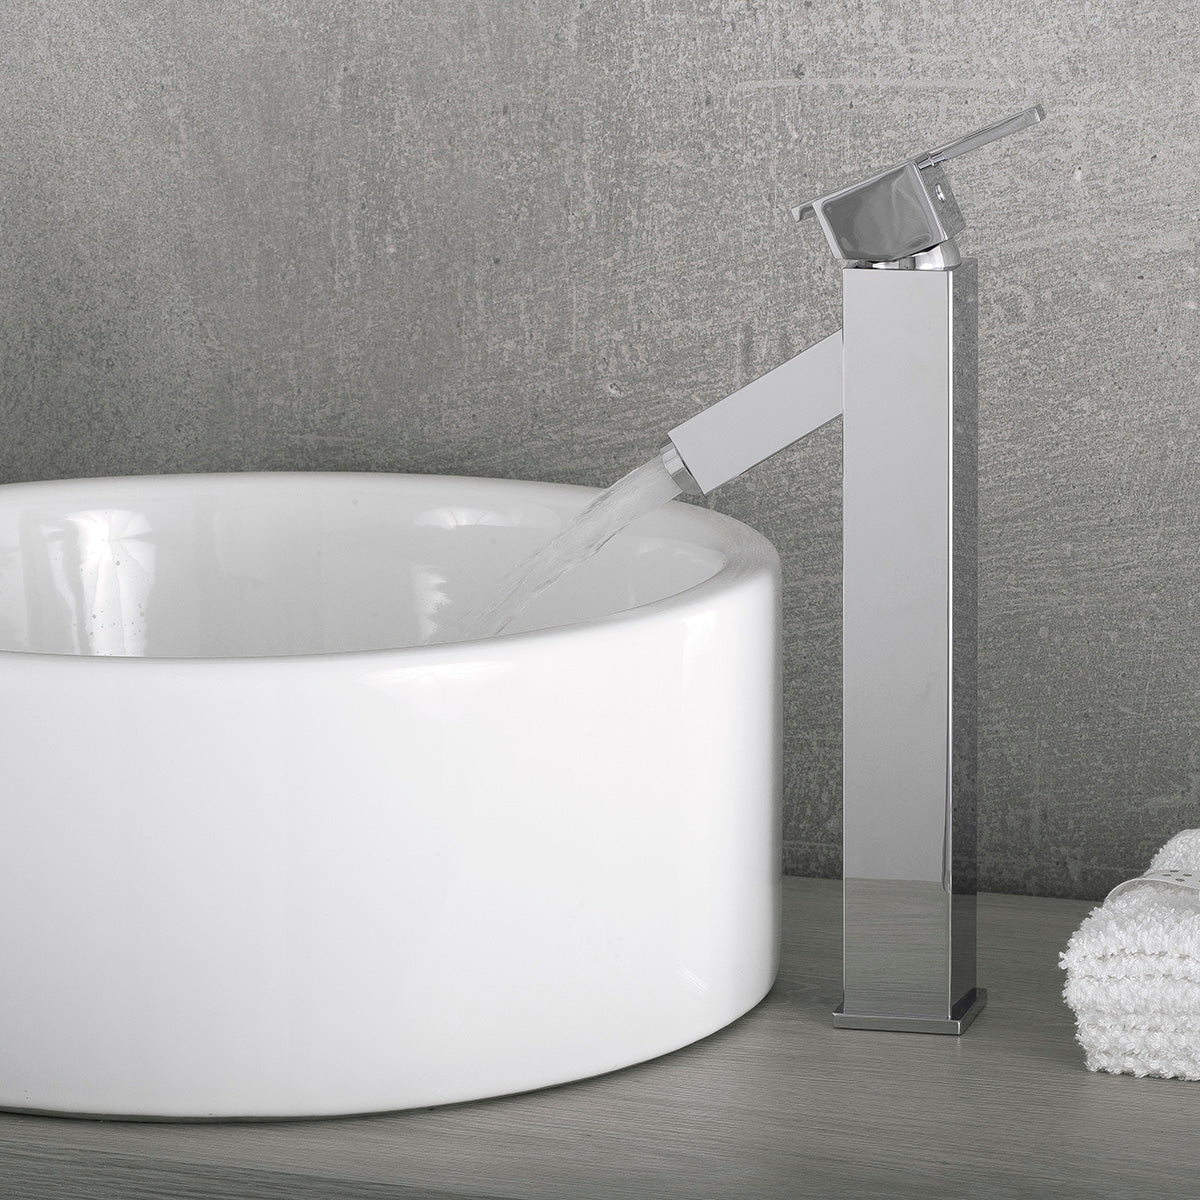 DAX Single Handle Vessel Sink Bathroom Faucet, Brass Body, Chrome Finish, 3-1/8 x 12-9/16 Inches (DAX-1282-CR)